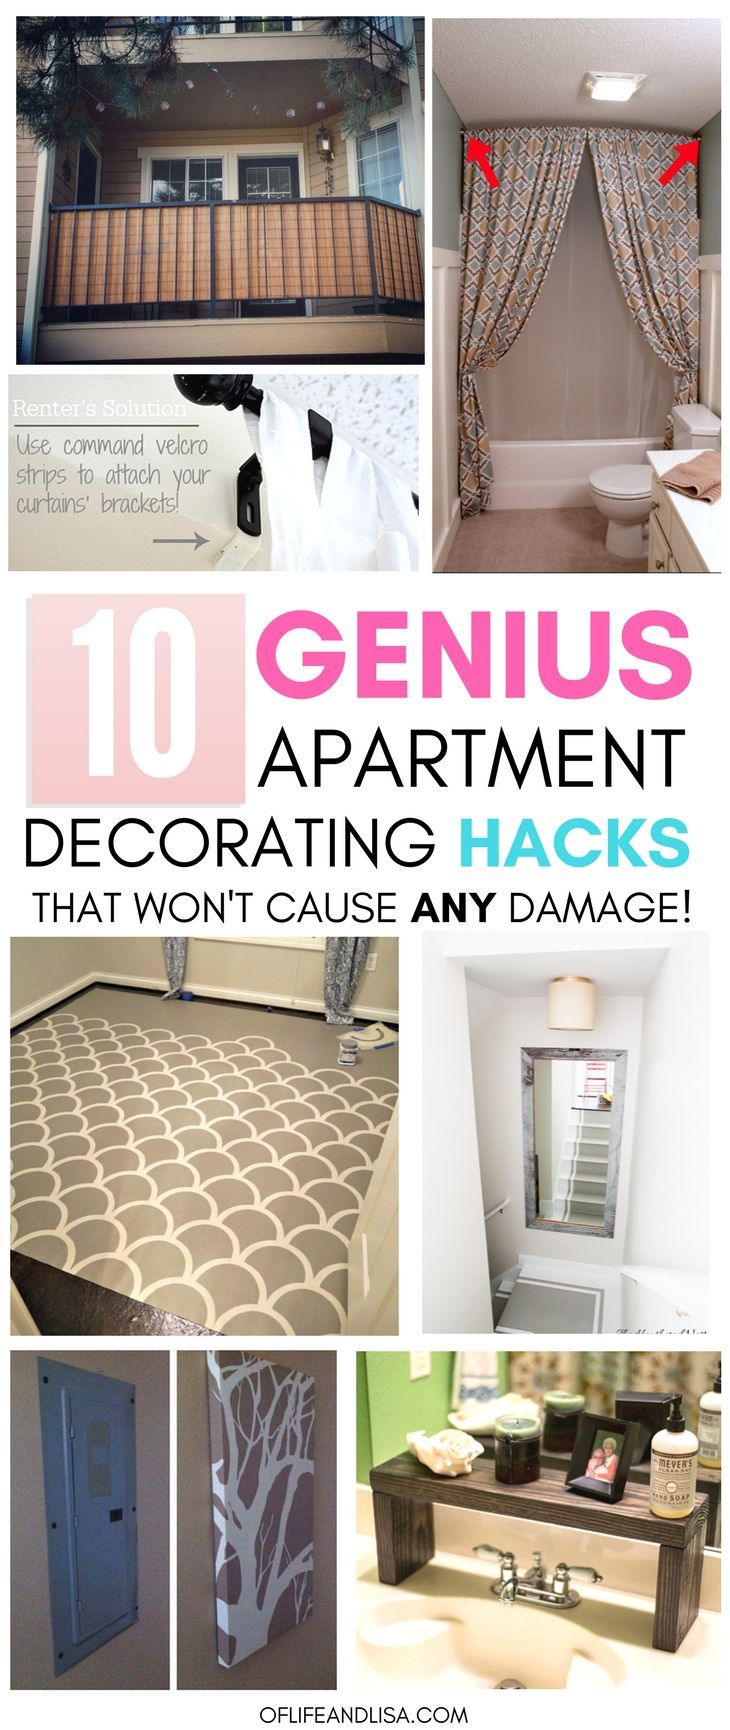 10 Incredibly Genius Apartment Decorating Hacks for Renters | Of Life + Lisa - 10 Incredibly Genius Apartment Decorating Hacks for Renters | Of Life + Lisa -   17 diy Apartment hacks ideas